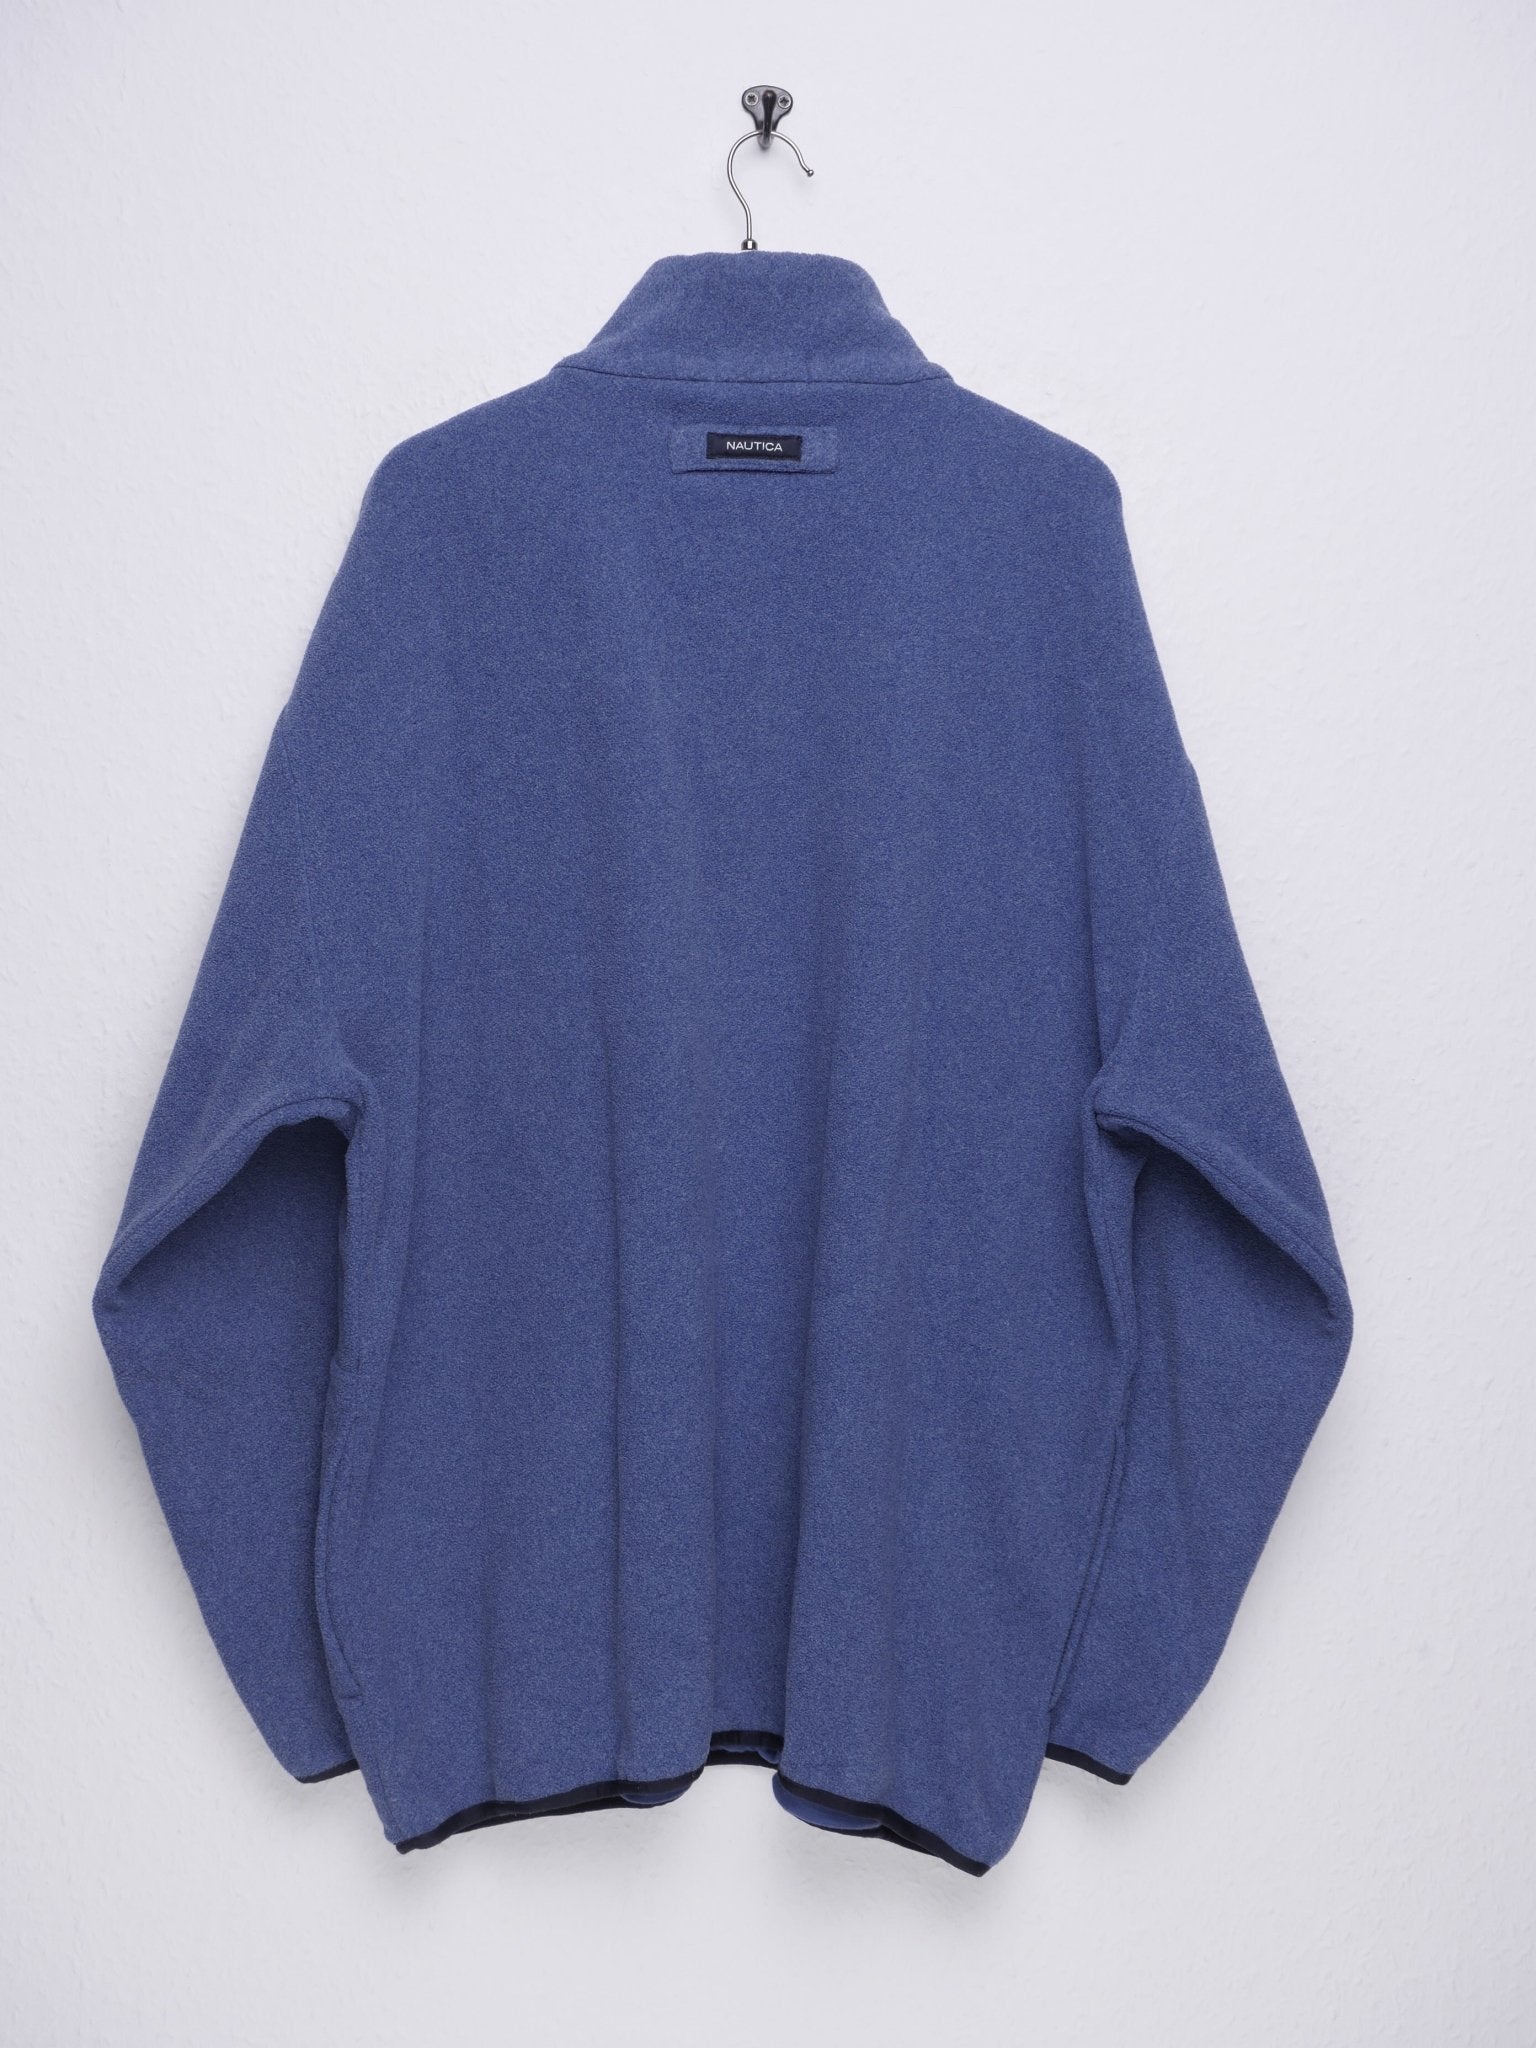 Nautica embroidered Logo blue Half Zip Fleece Sweater - Peeces